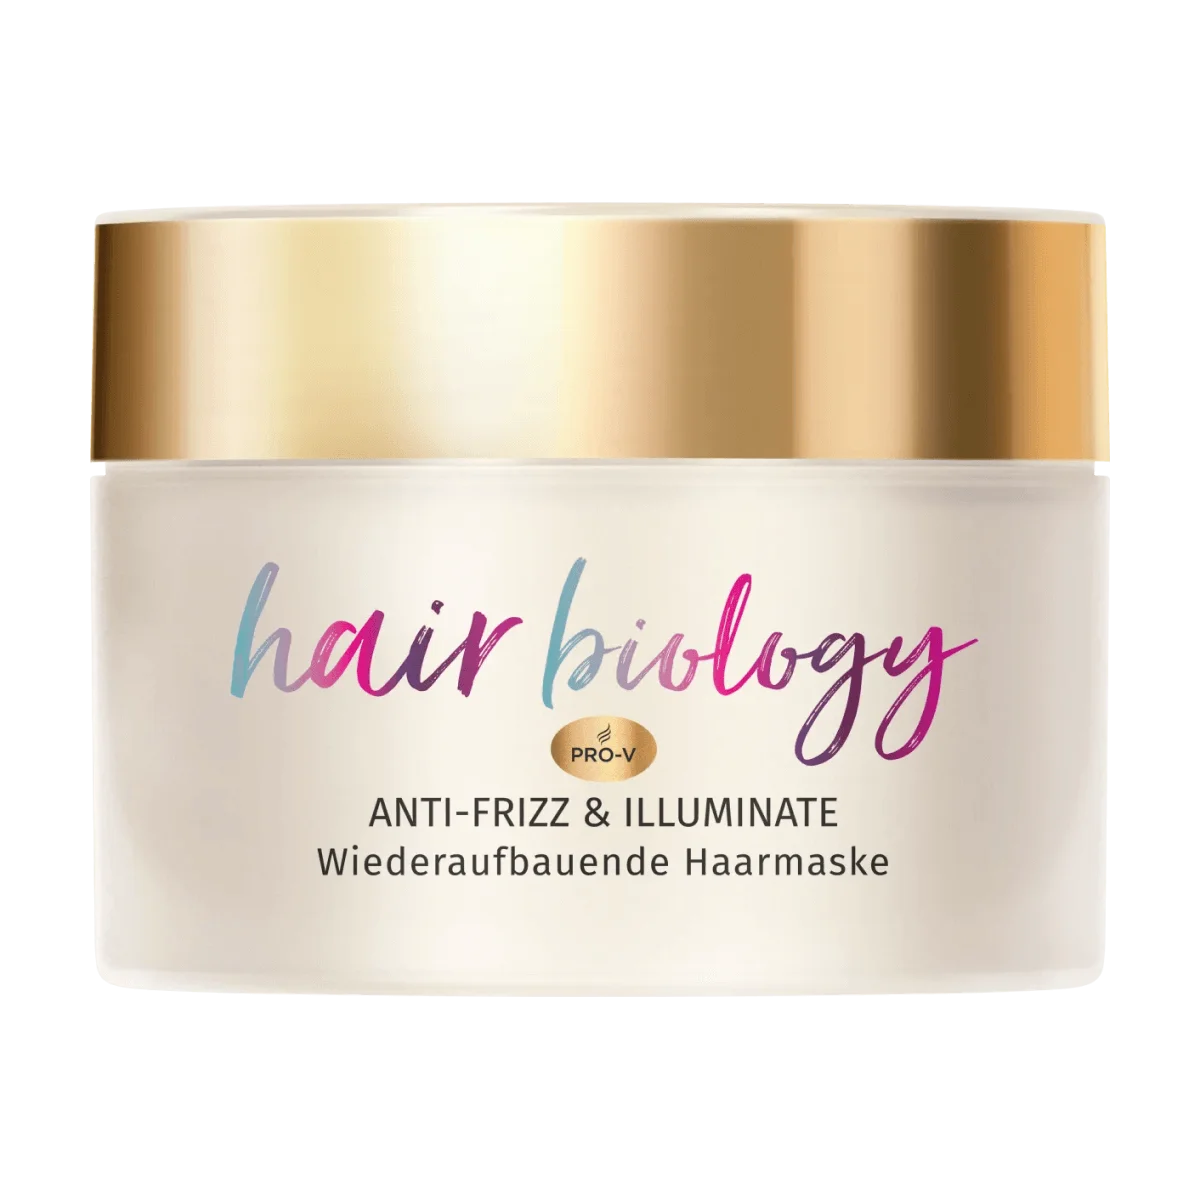 hair biology Haarkur Anti-Frizz & Illuminate Maske, 160 ml